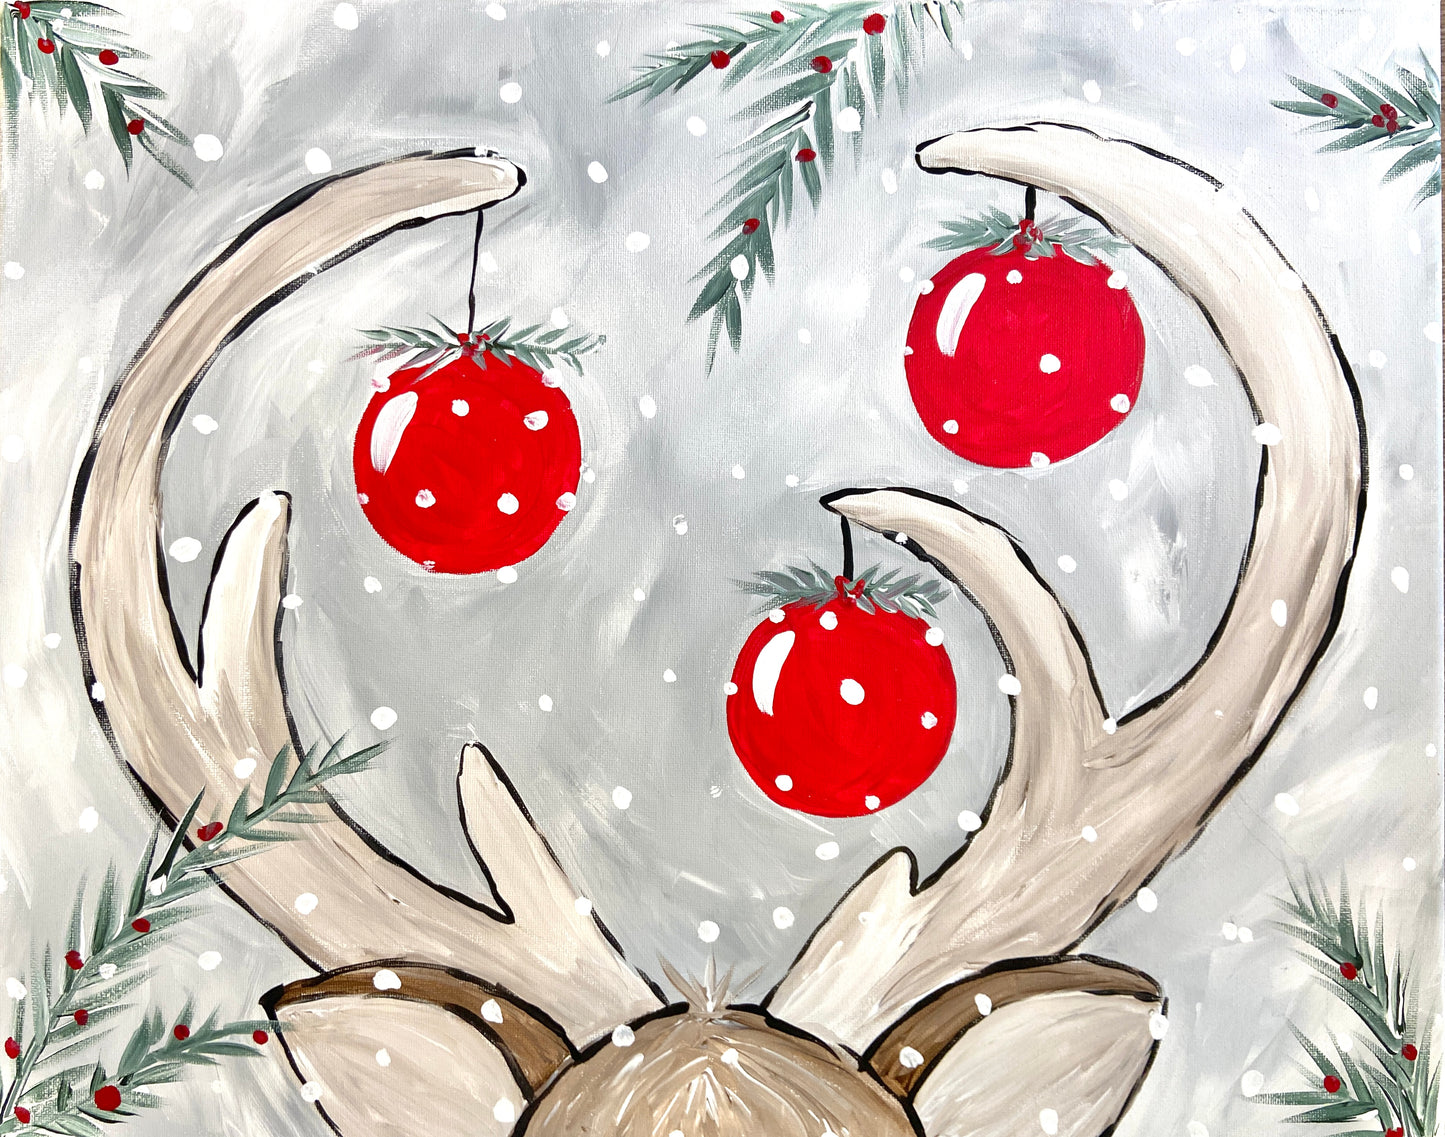 Reindeer Games Acrylic Art Paint Tutorial